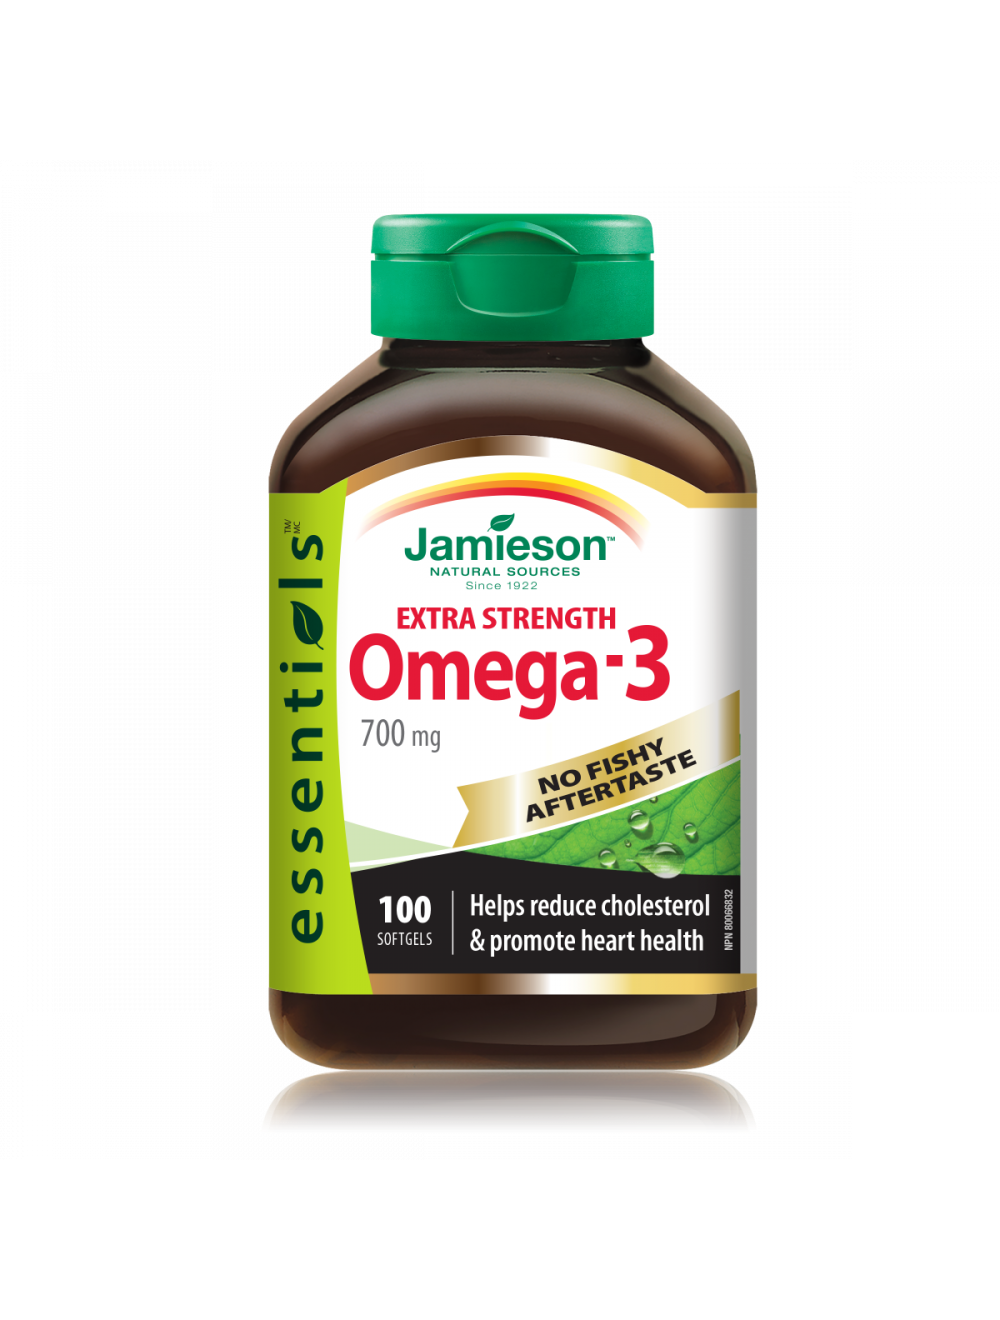 Jamieson omega-3 extra strength